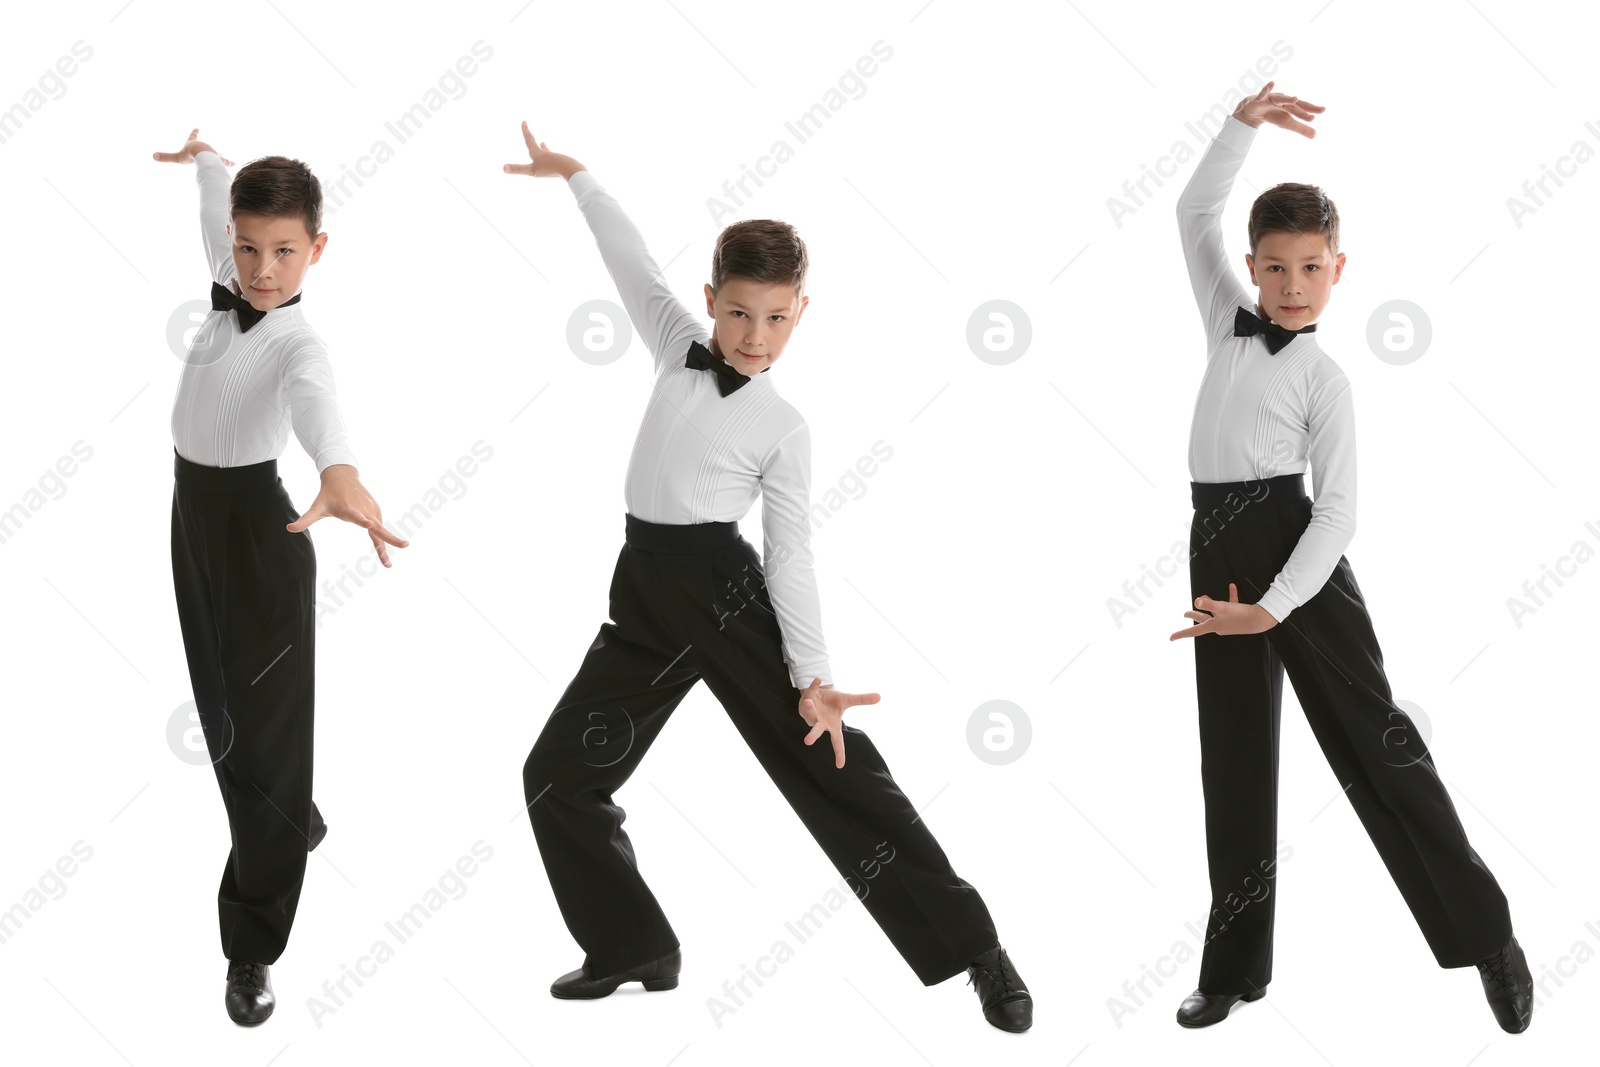 Image of Boy dancing on white background, set of photos